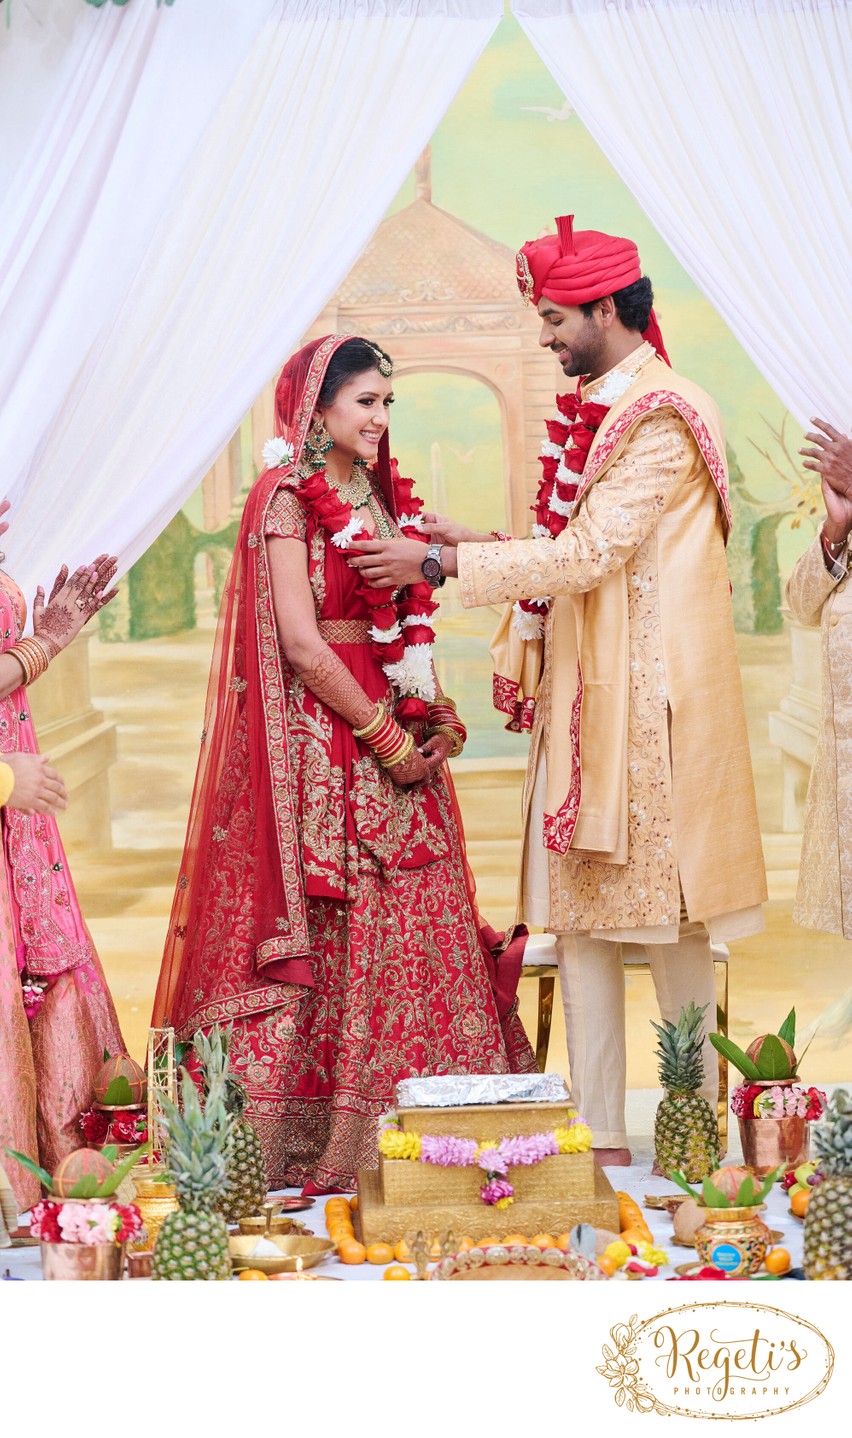 Garland exchange at the Indian Wedding Ceremony